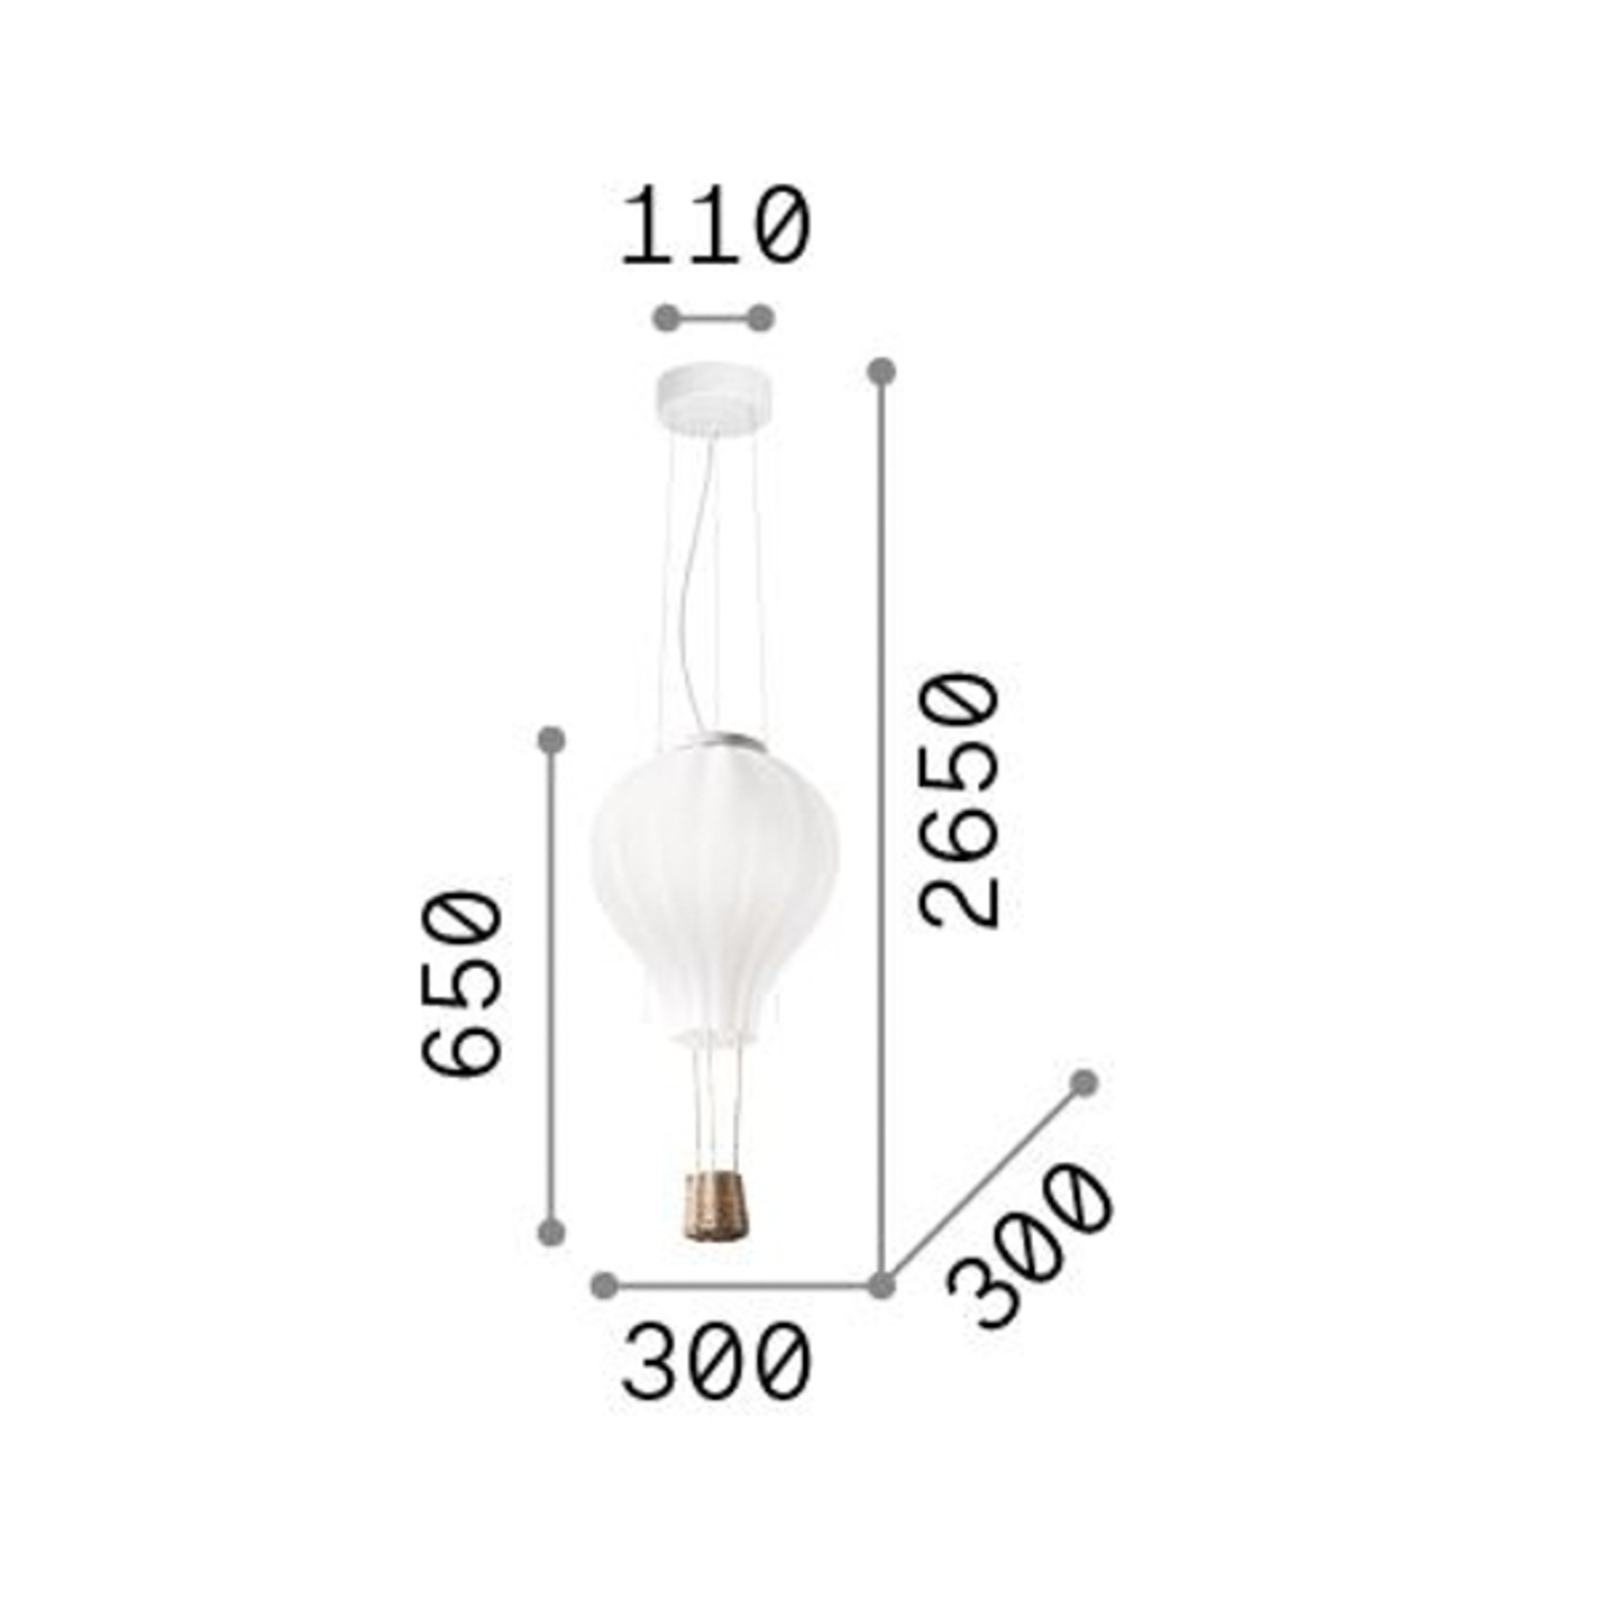 Ideal Lux Dream Big hængelampe, opalglas, Ø 30 cm